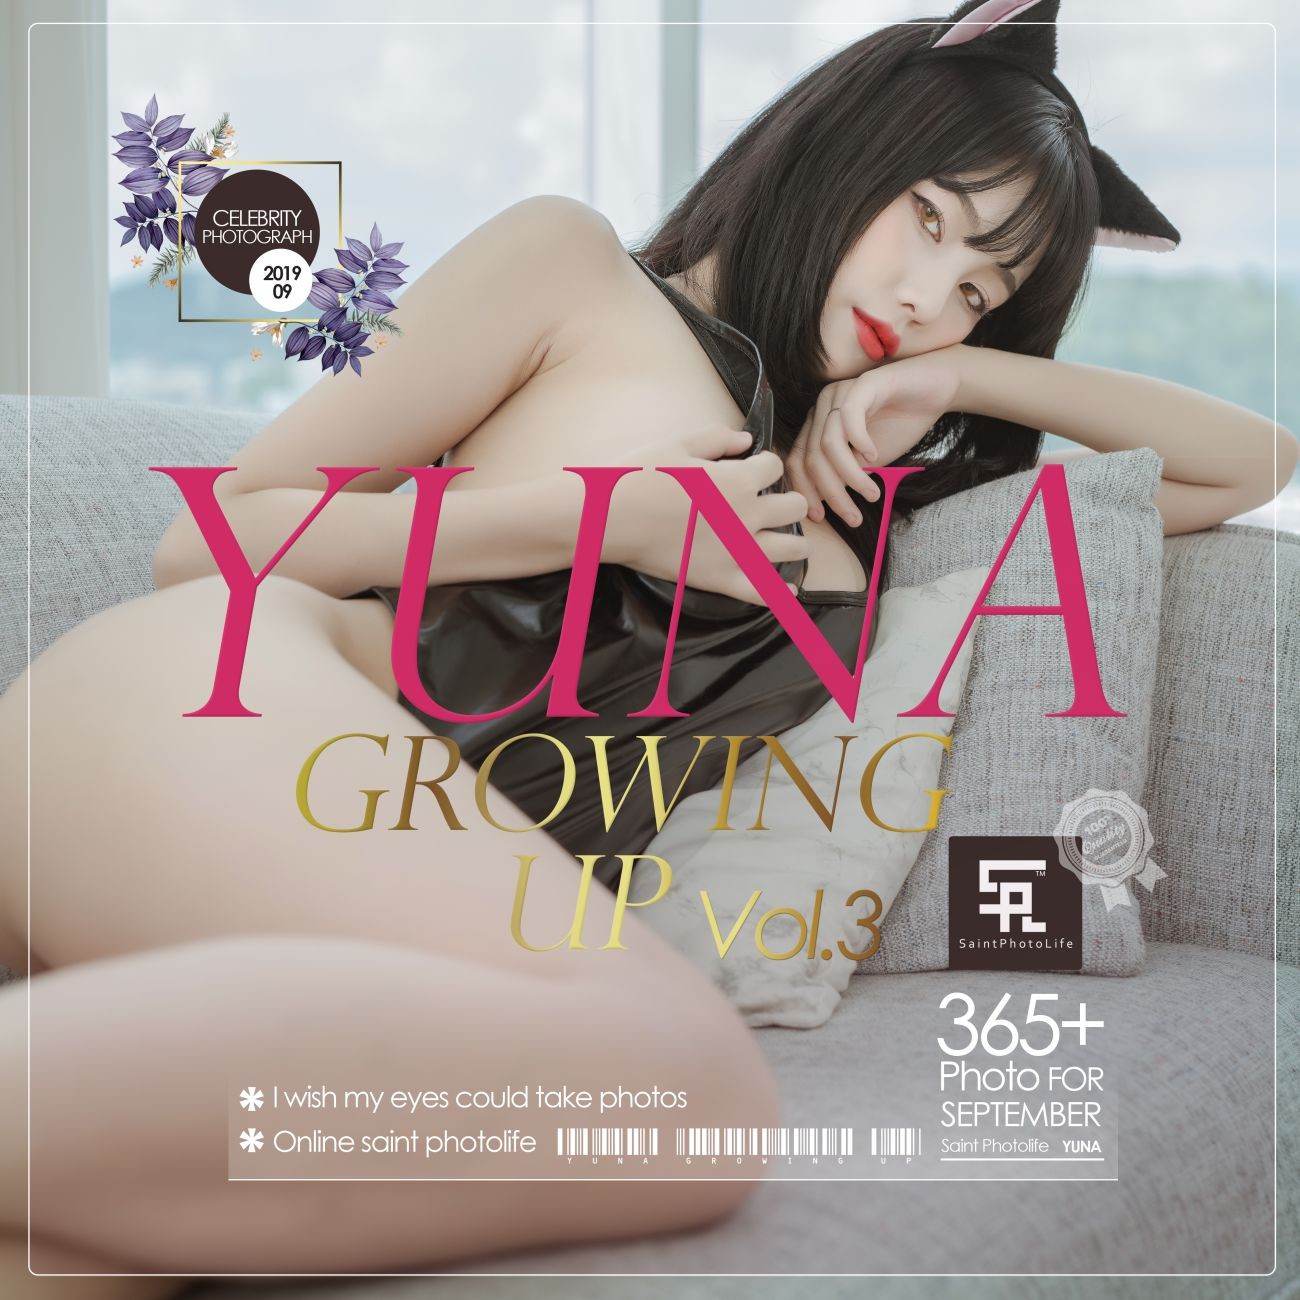 saintphotolife Yuna Growing up Vol.3 (51)